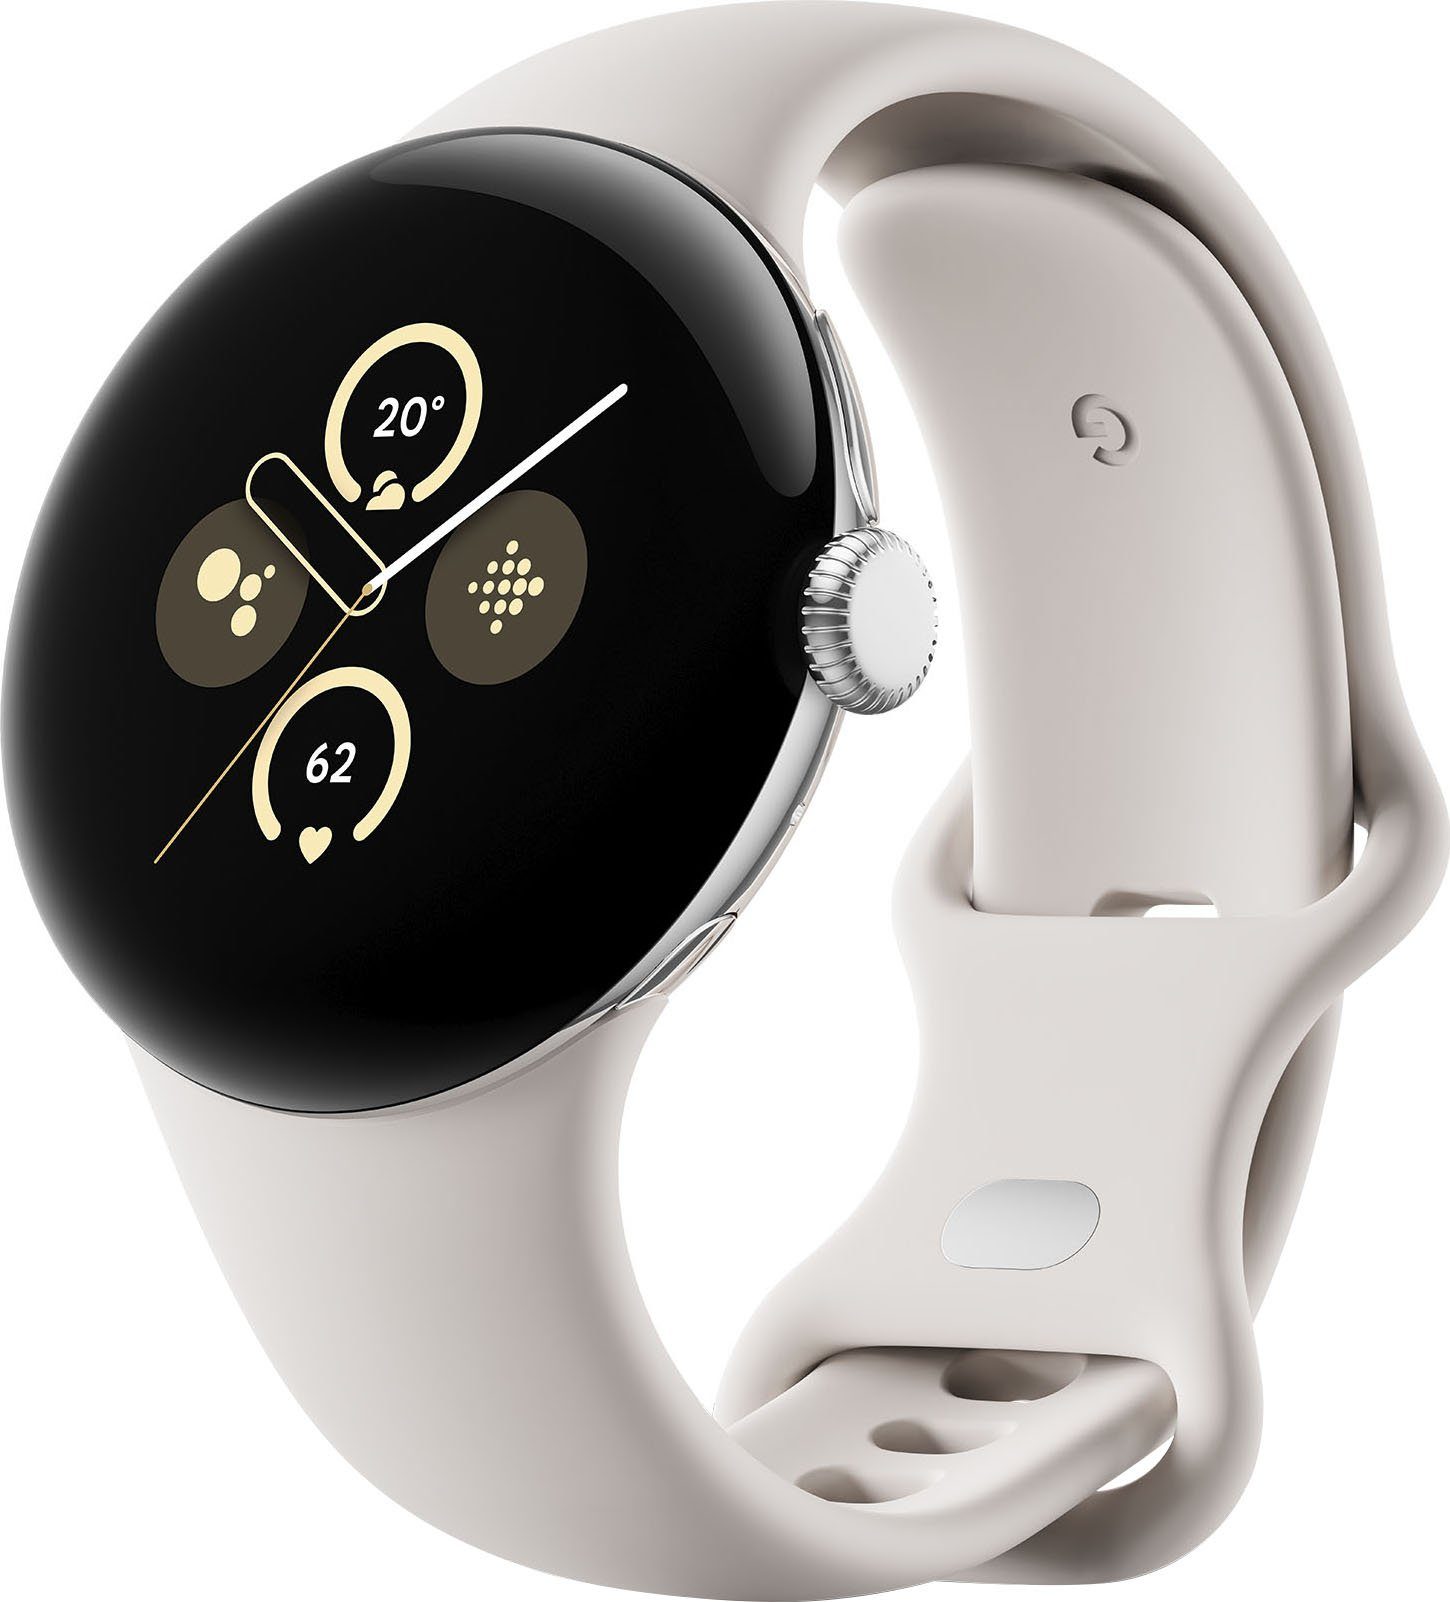 Google Pixel Watch 2 LTE Smartwatch (Watch OS 4)